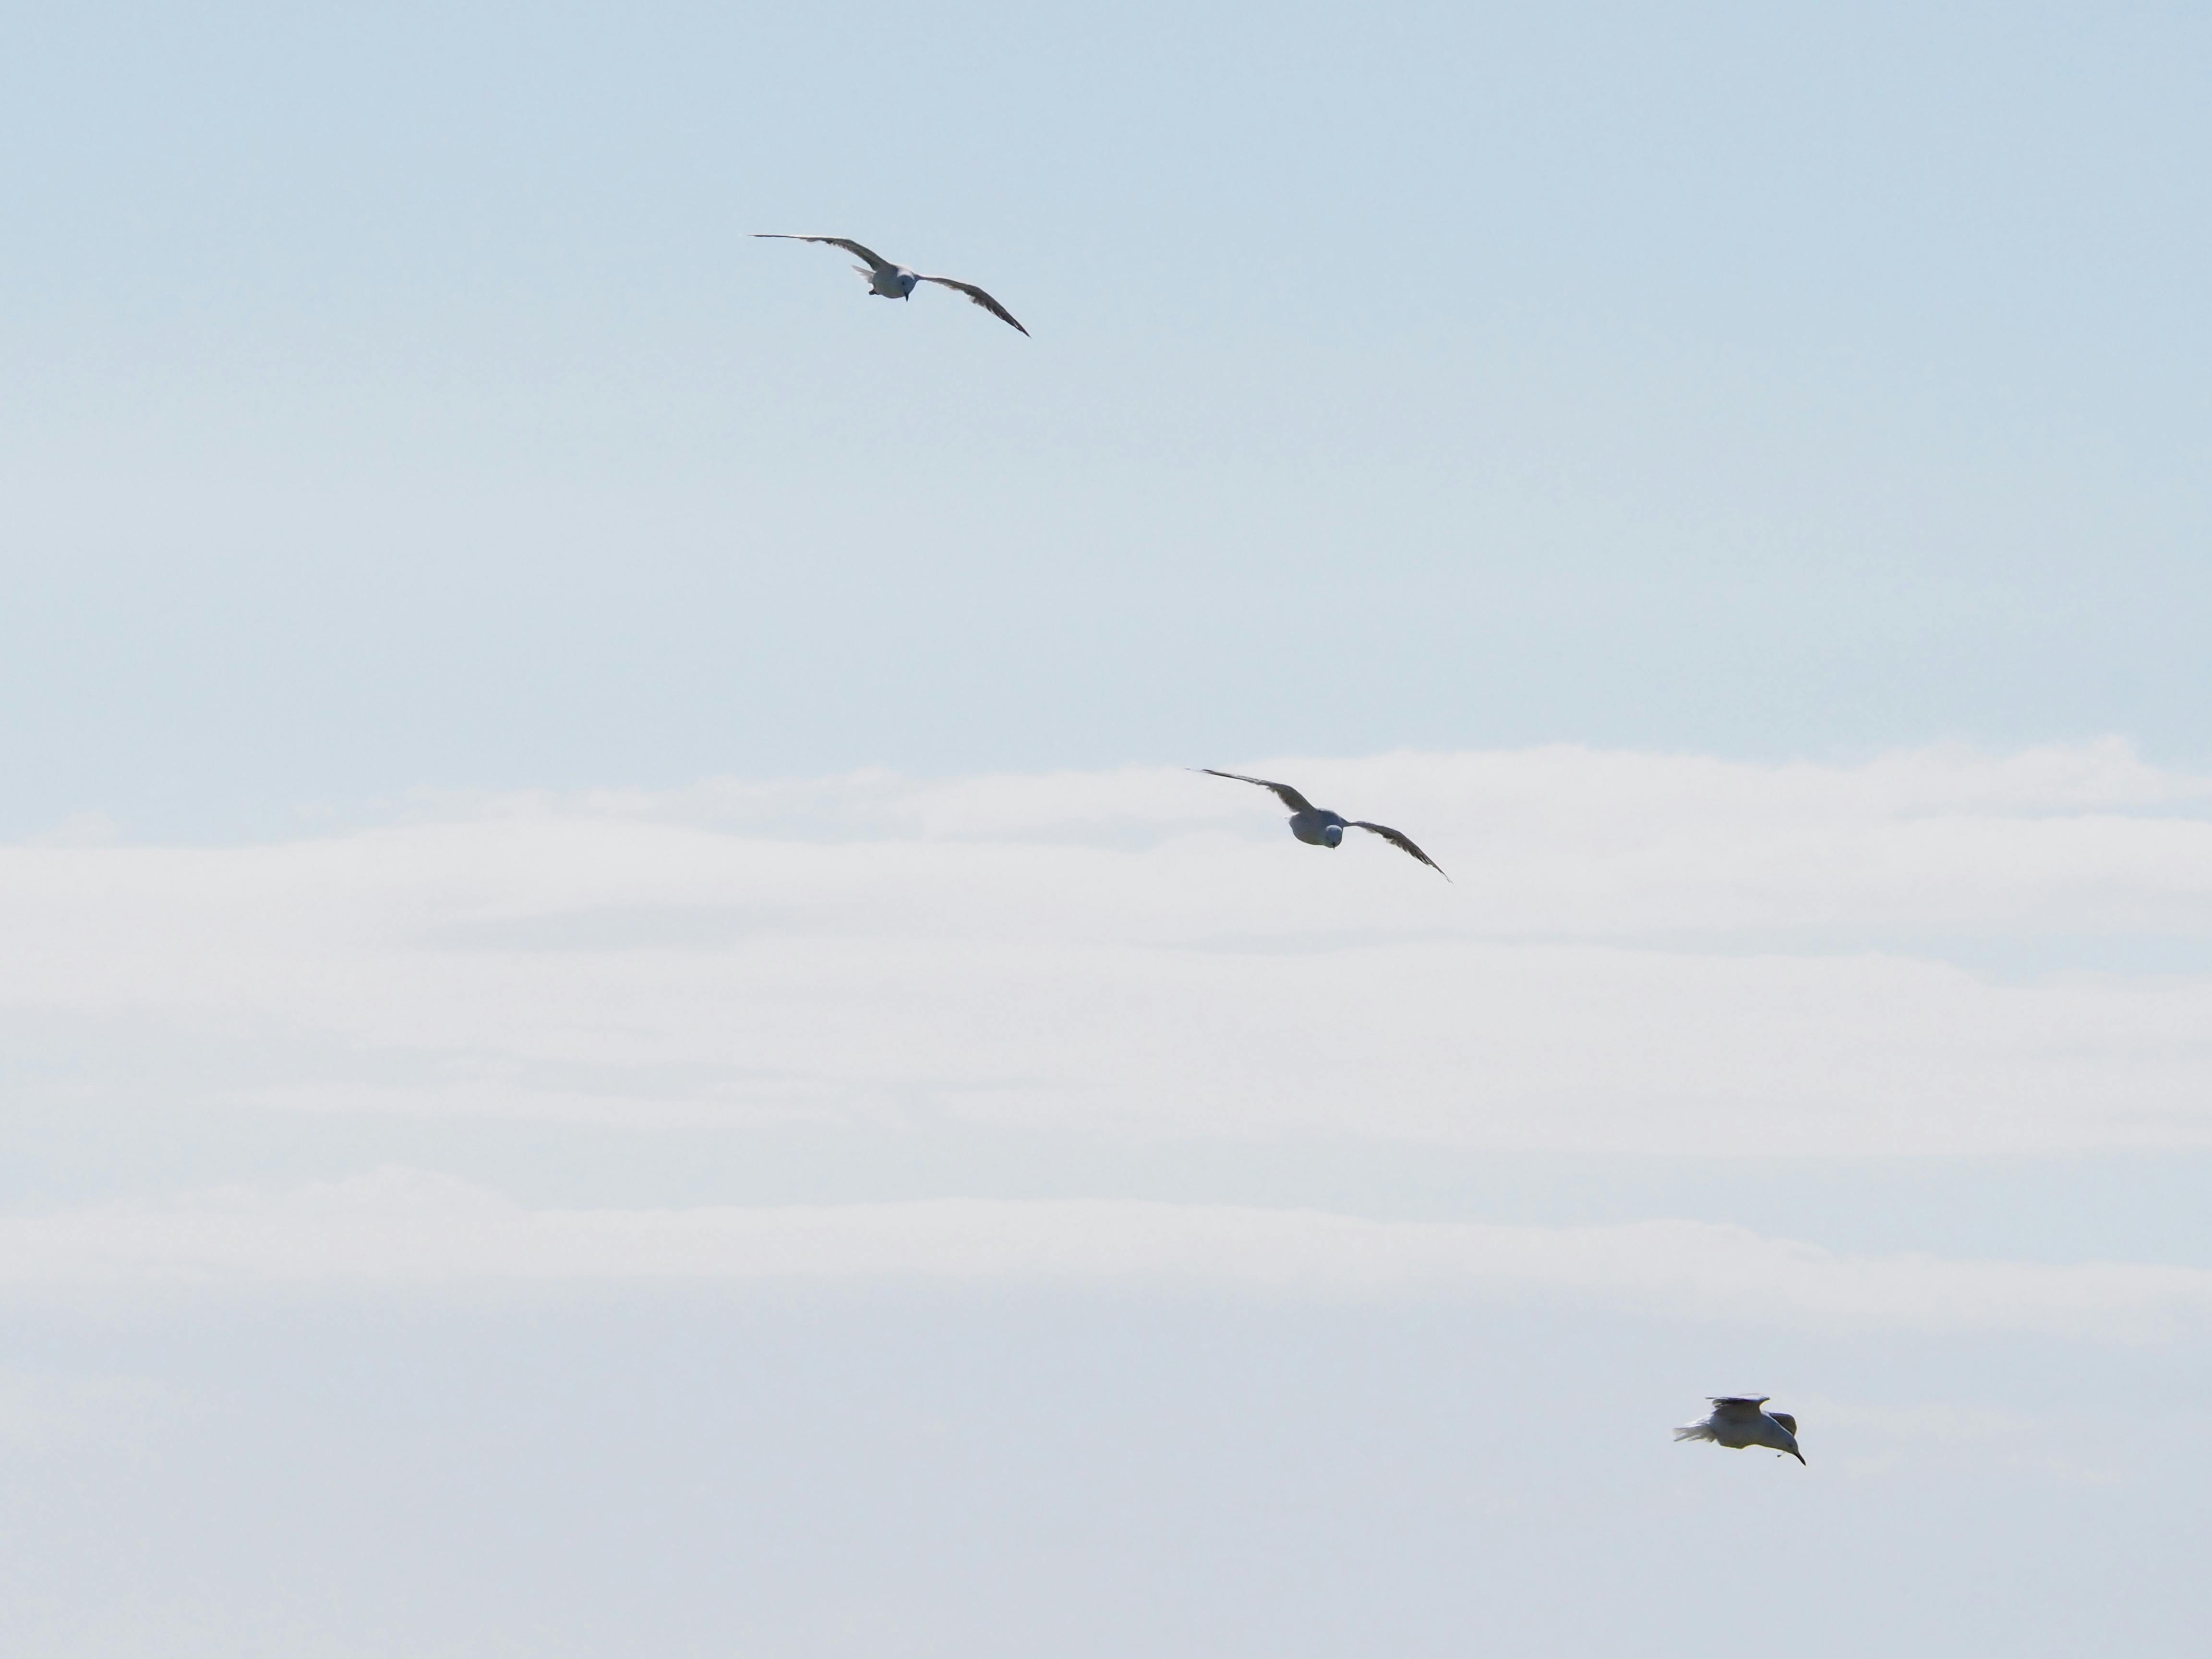 three birds flying under blue sky at daytime